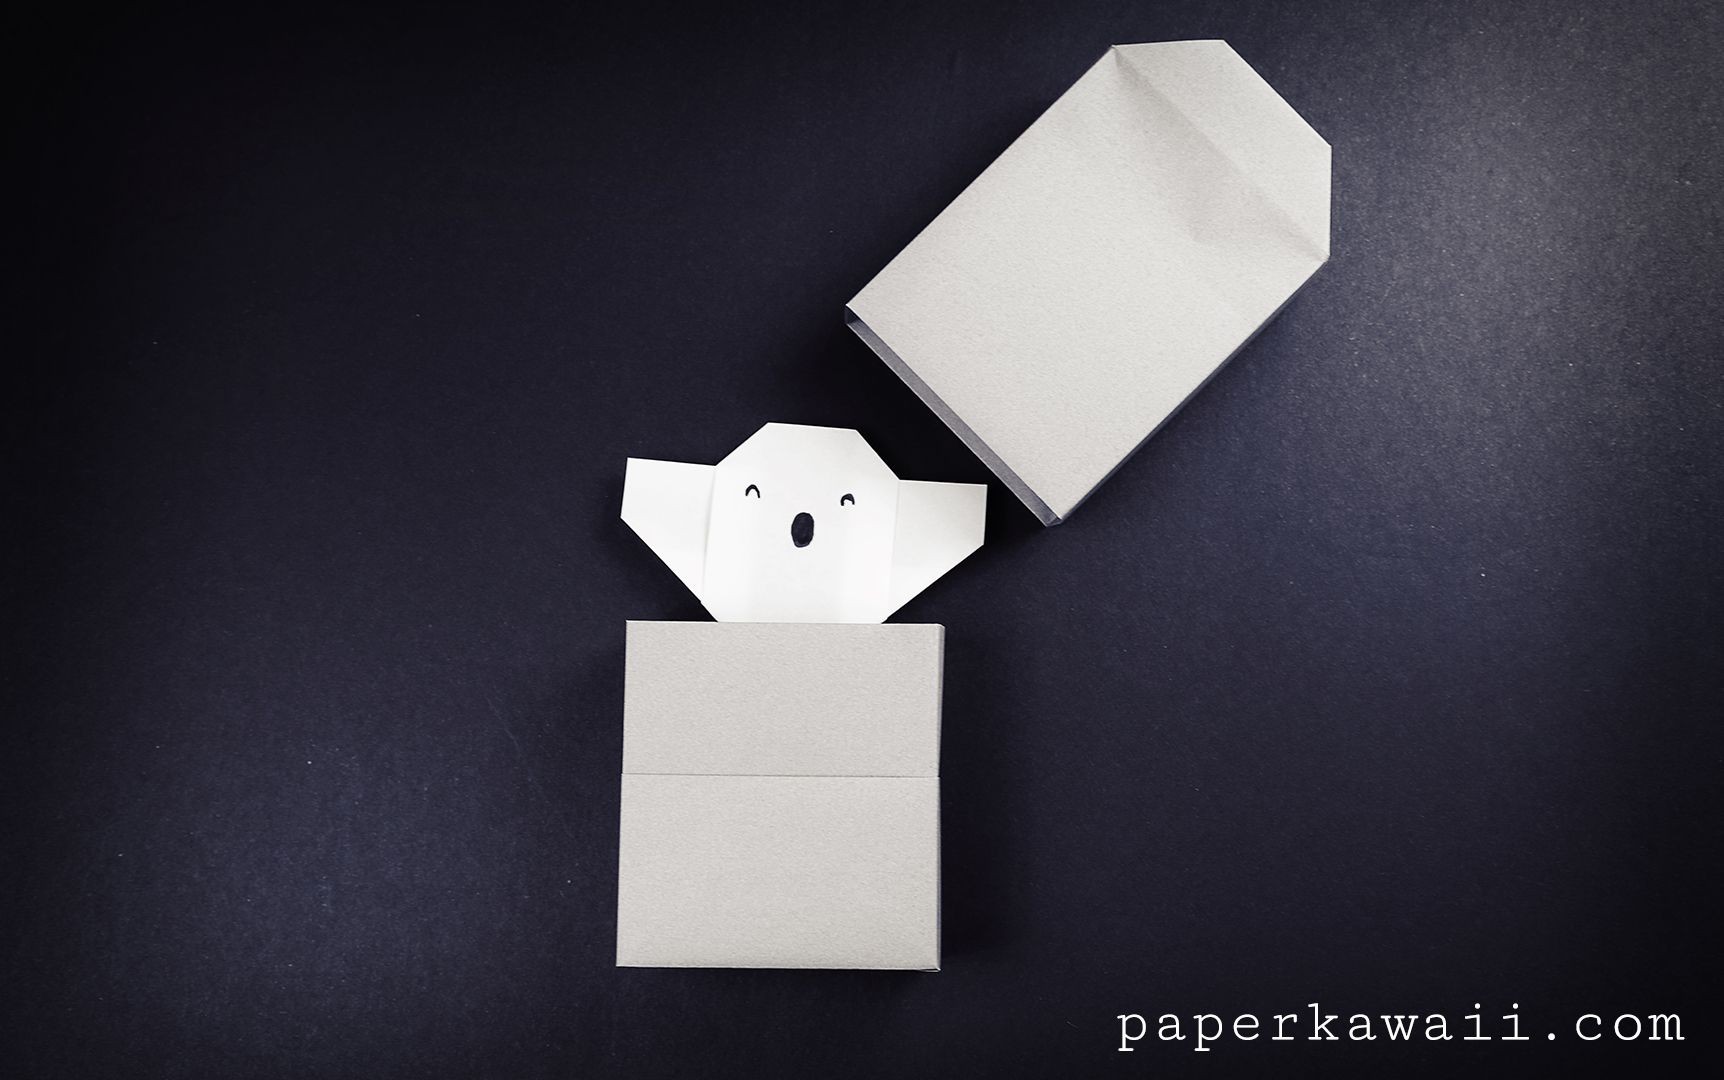 Papercraft origami origami Grave Stone Box Halloween origami origami